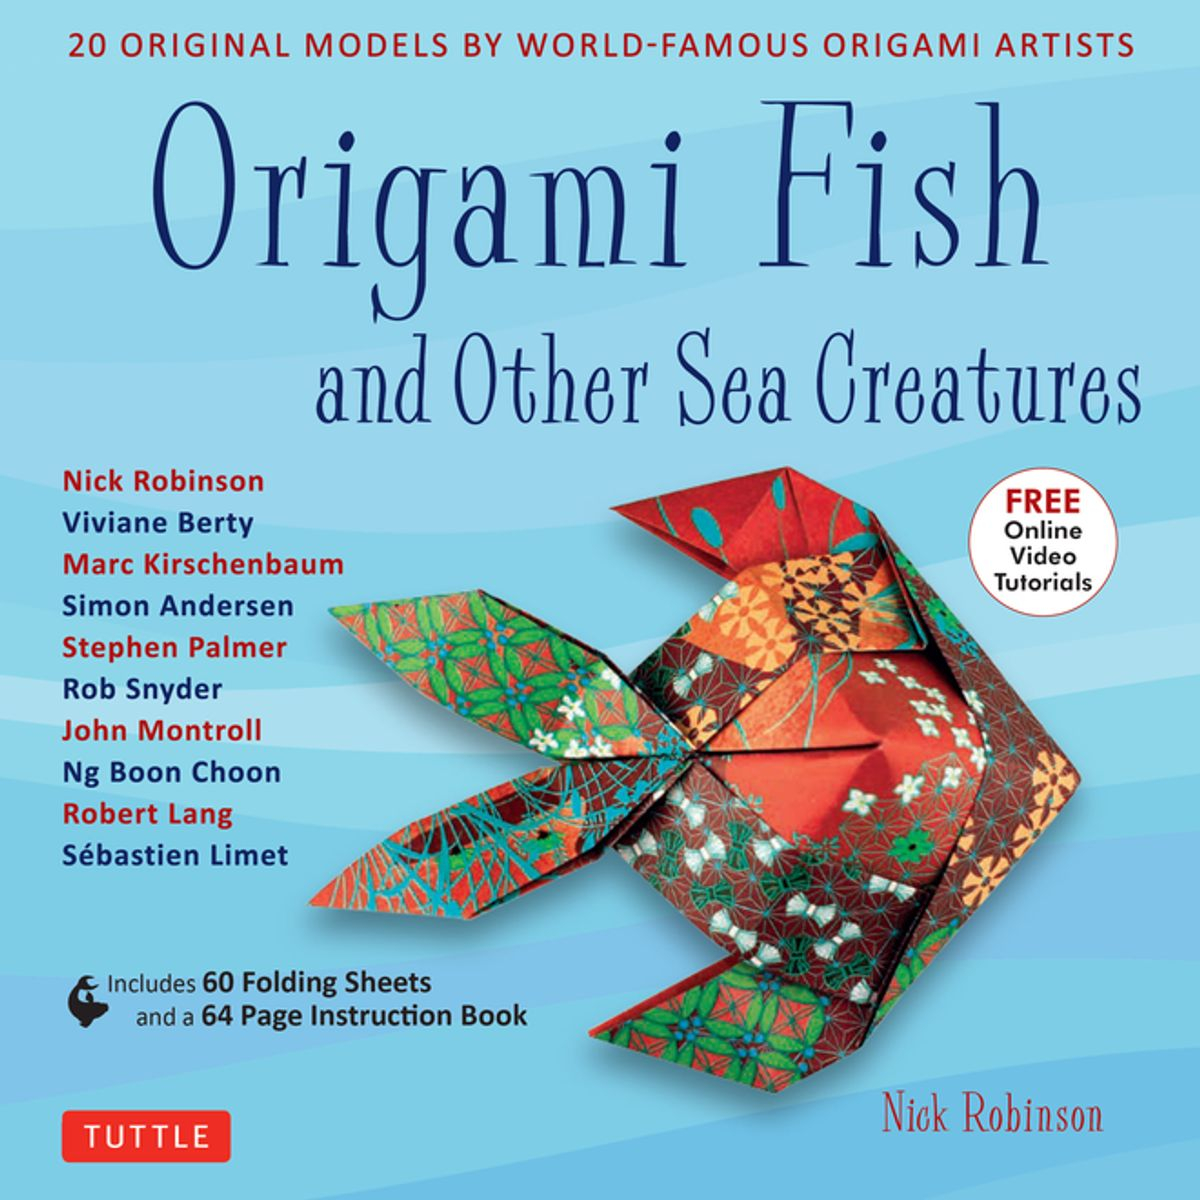 Origami Fish Directions Origami Fish And Other Sea Creatures Ebook Ebook Nick Robinson Rakuten Kobo